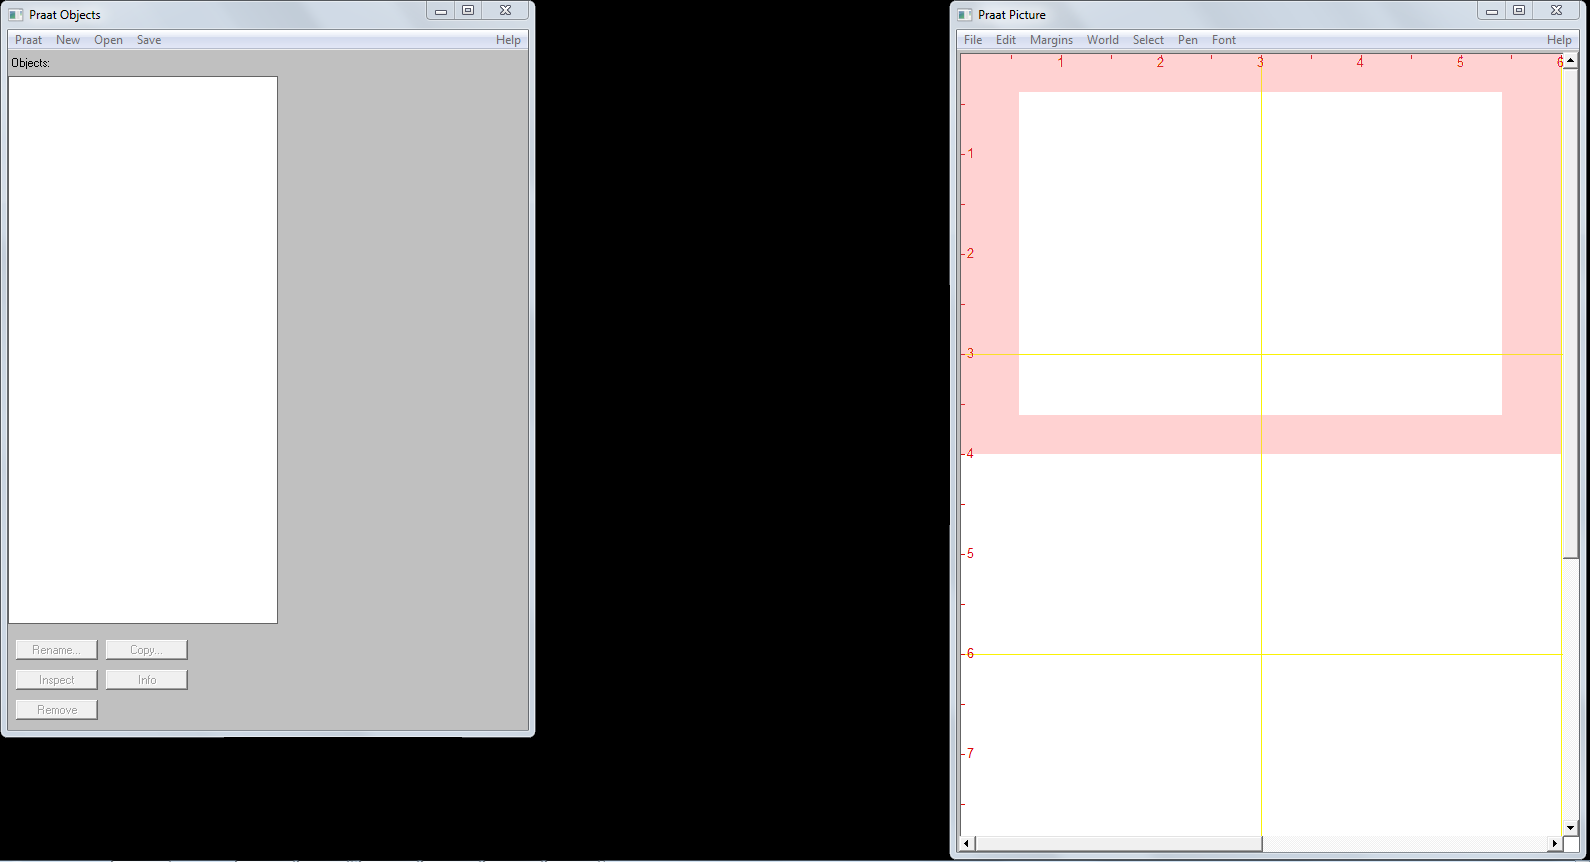 Figure 2: Praat's main object window (left) and Praat's picture window (right)